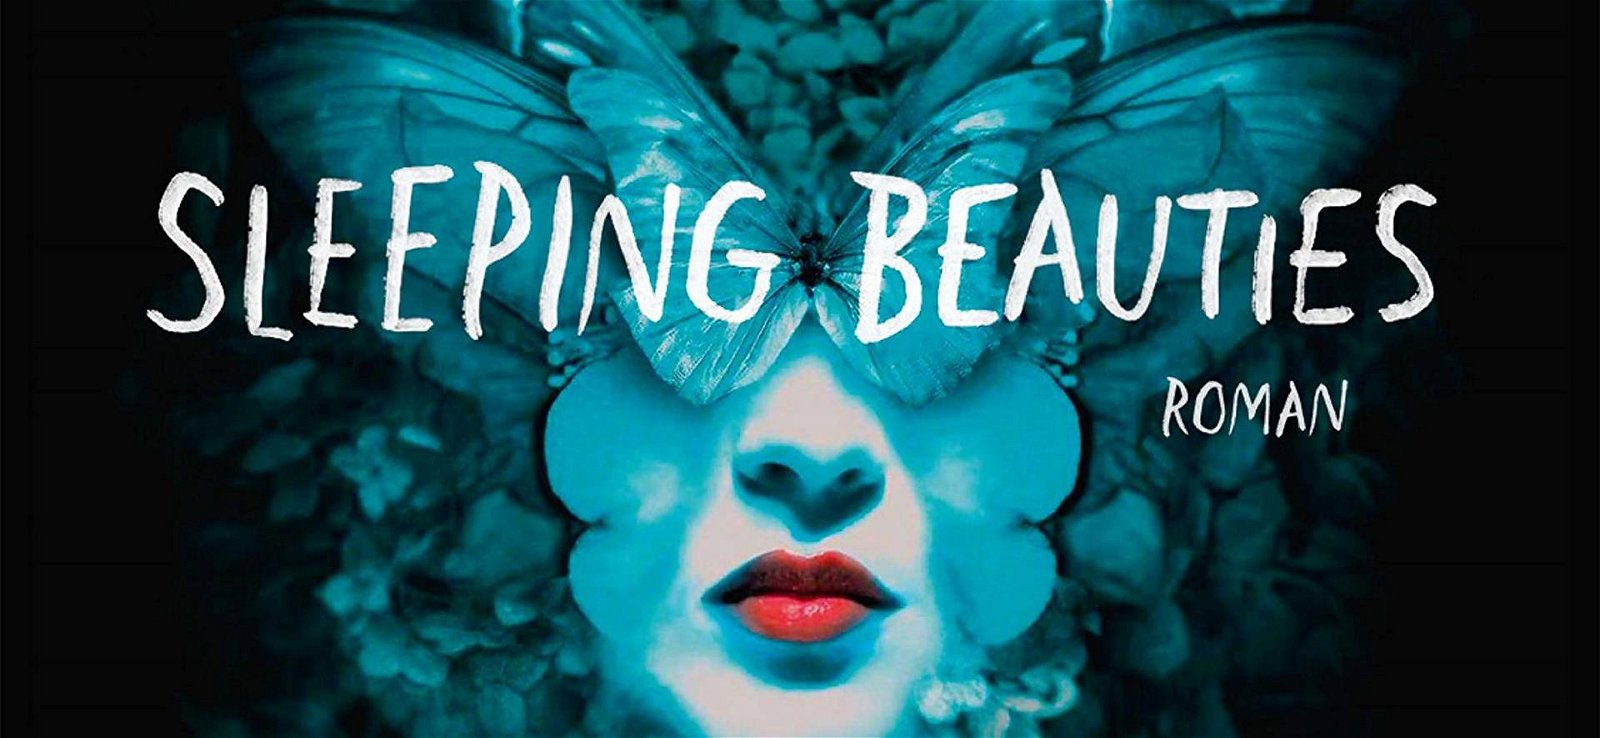 Immagine di Sleeping Beauties di Stephen King diventa un fumetto per IDW